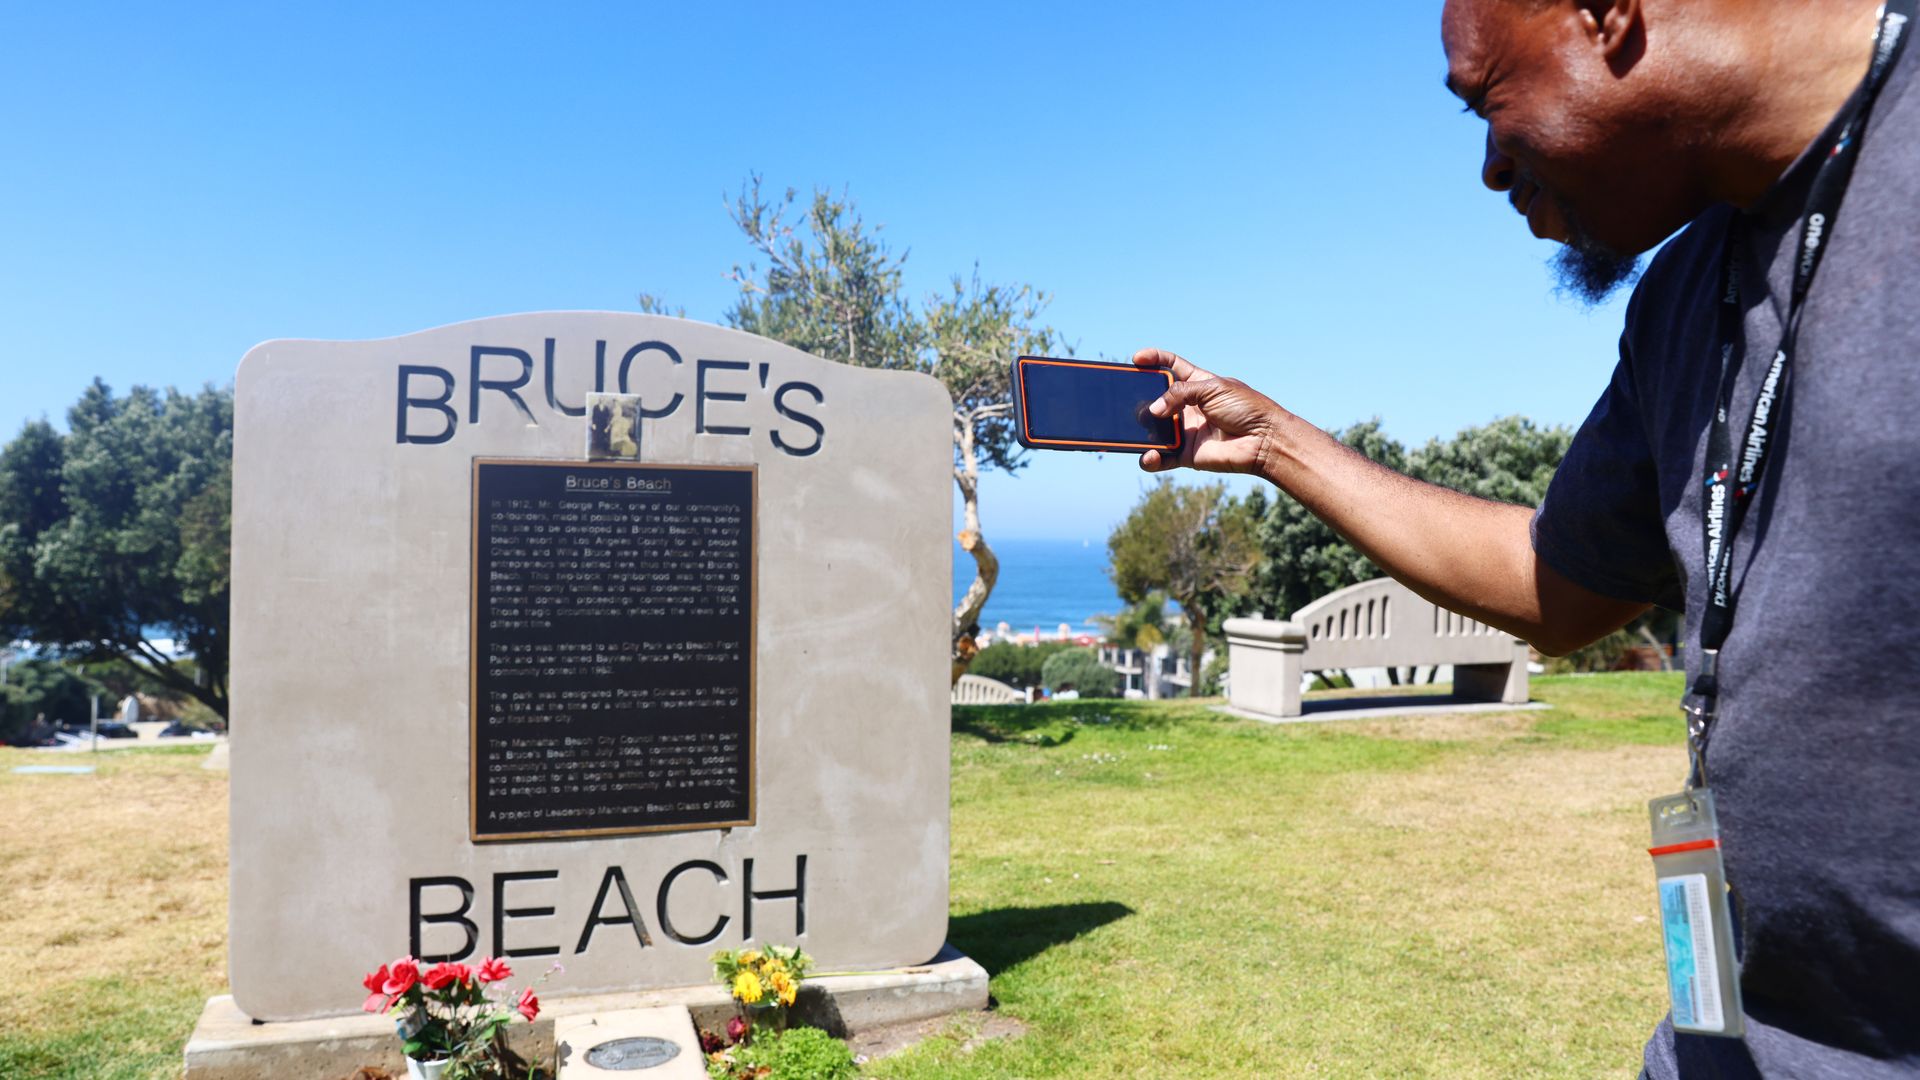 William Redmond III, of Atlanta, takes a photo of the historic plaque marking Bruce's Beach in Manhattan Beach, California. 